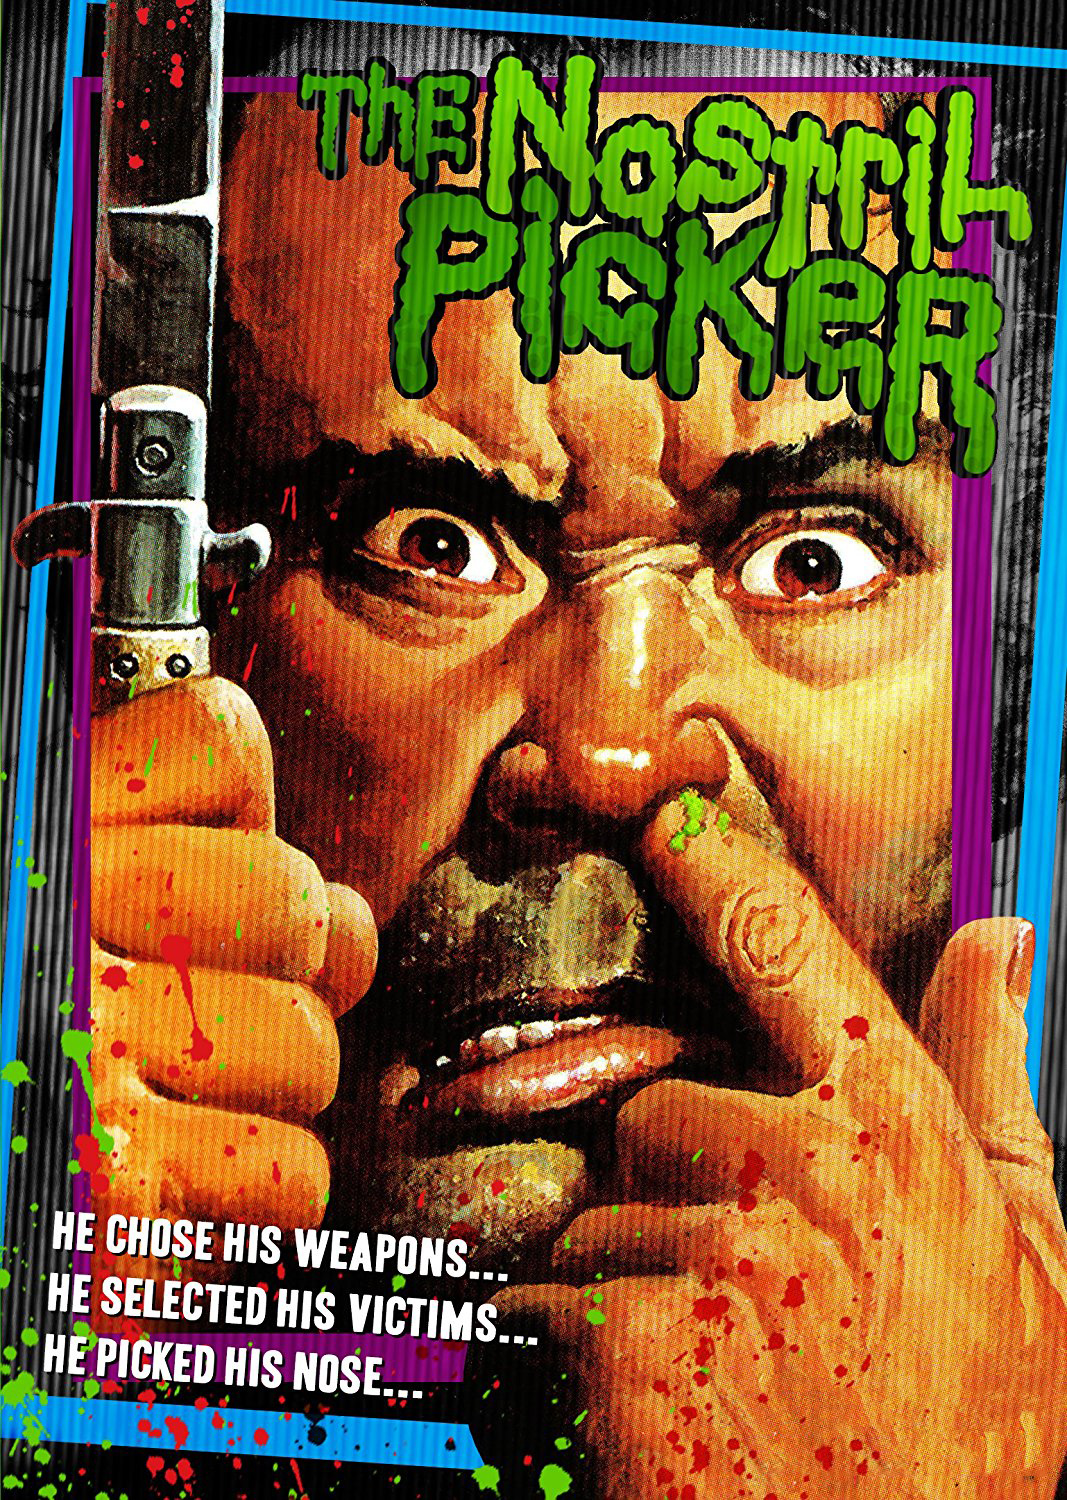 The Nostril Picker (1993) starring Carl Zschering on DVD on DVD